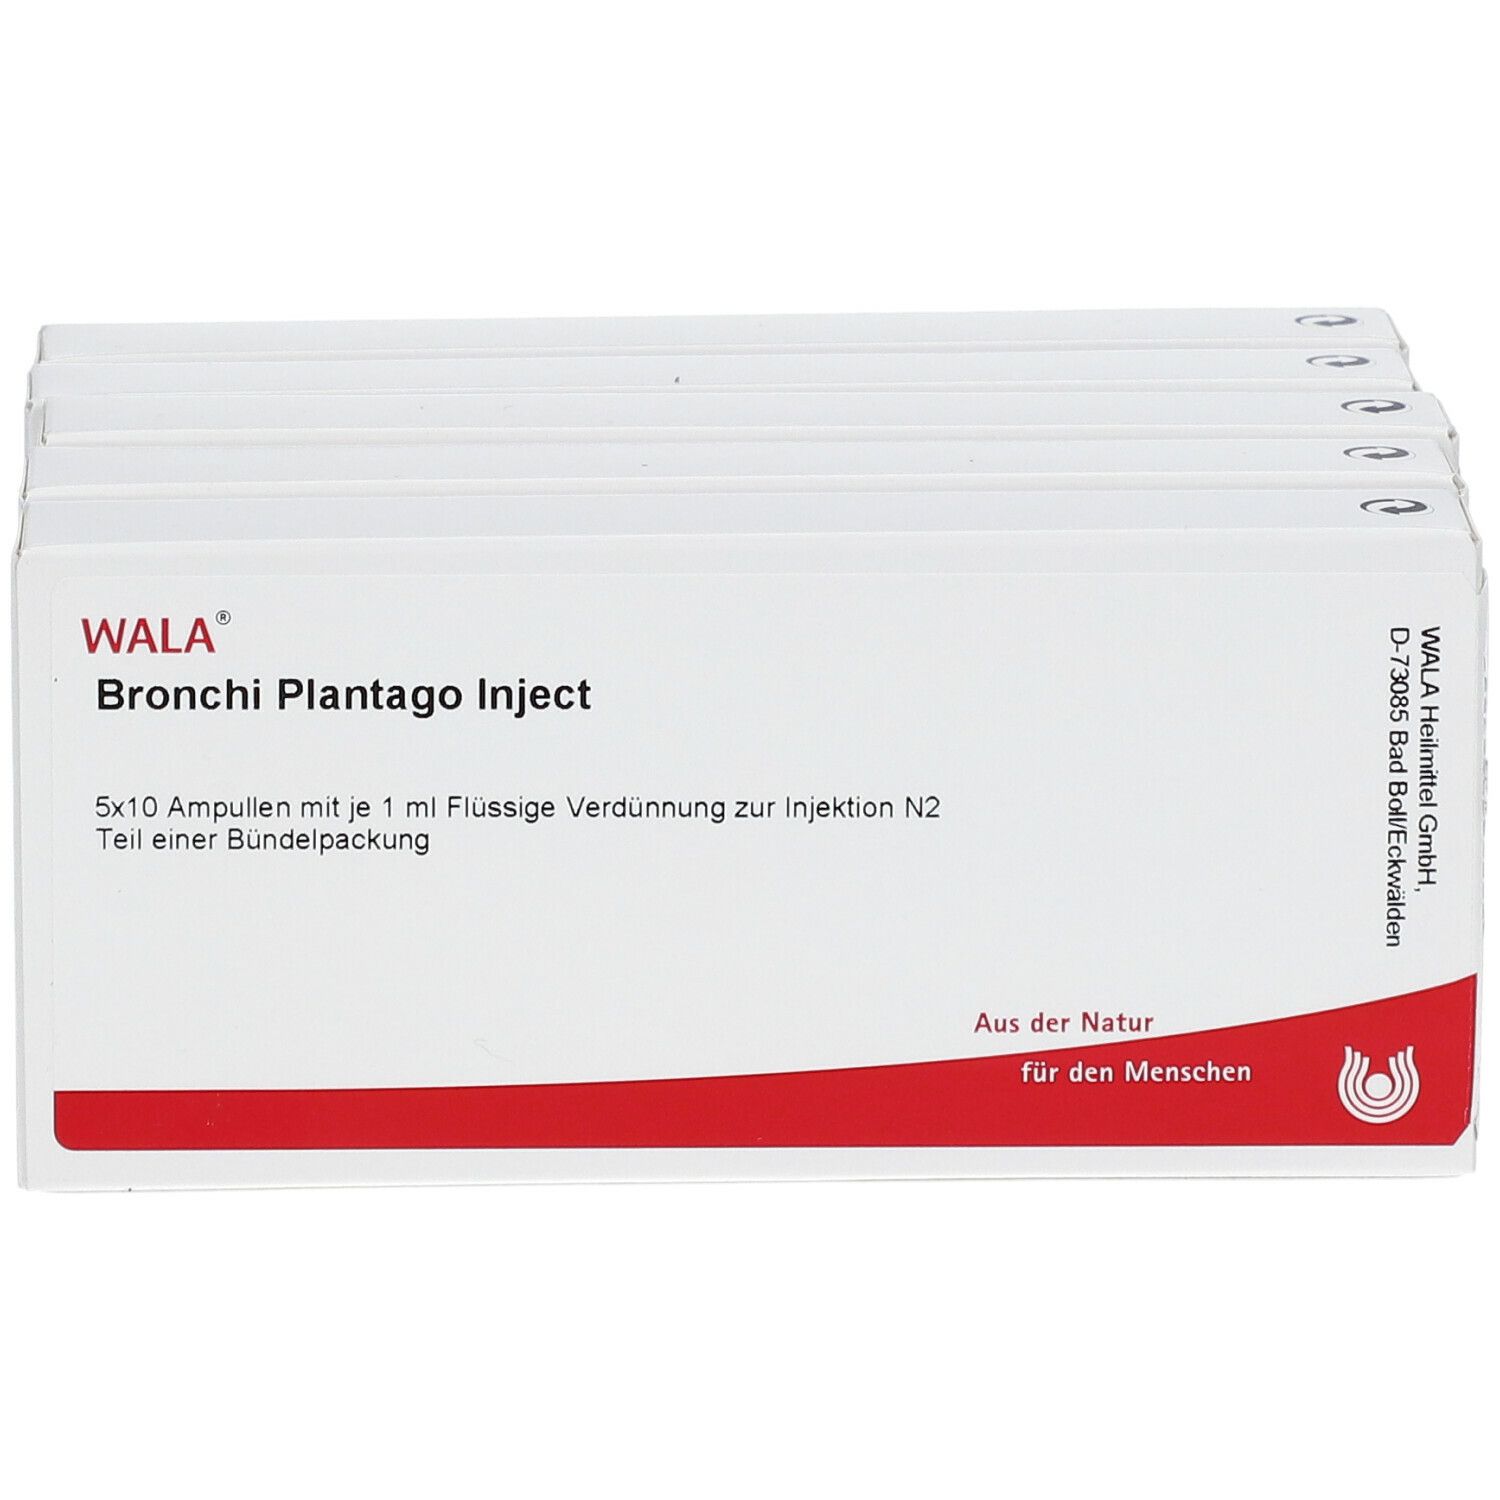 WALA® Bronchi Plantago Inject Ampullen